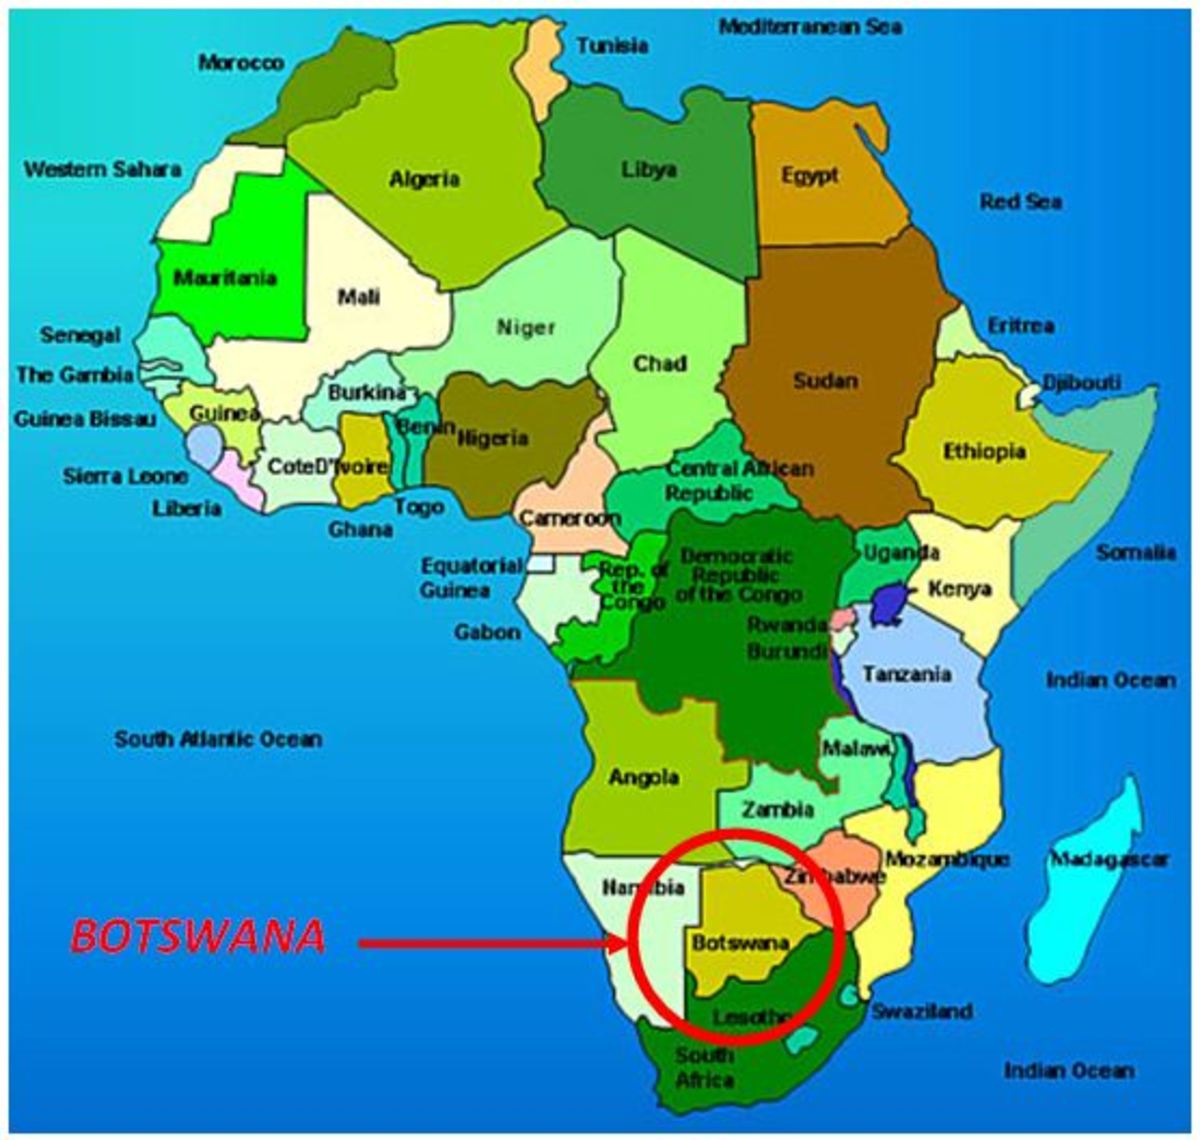 diamond mines in africa map